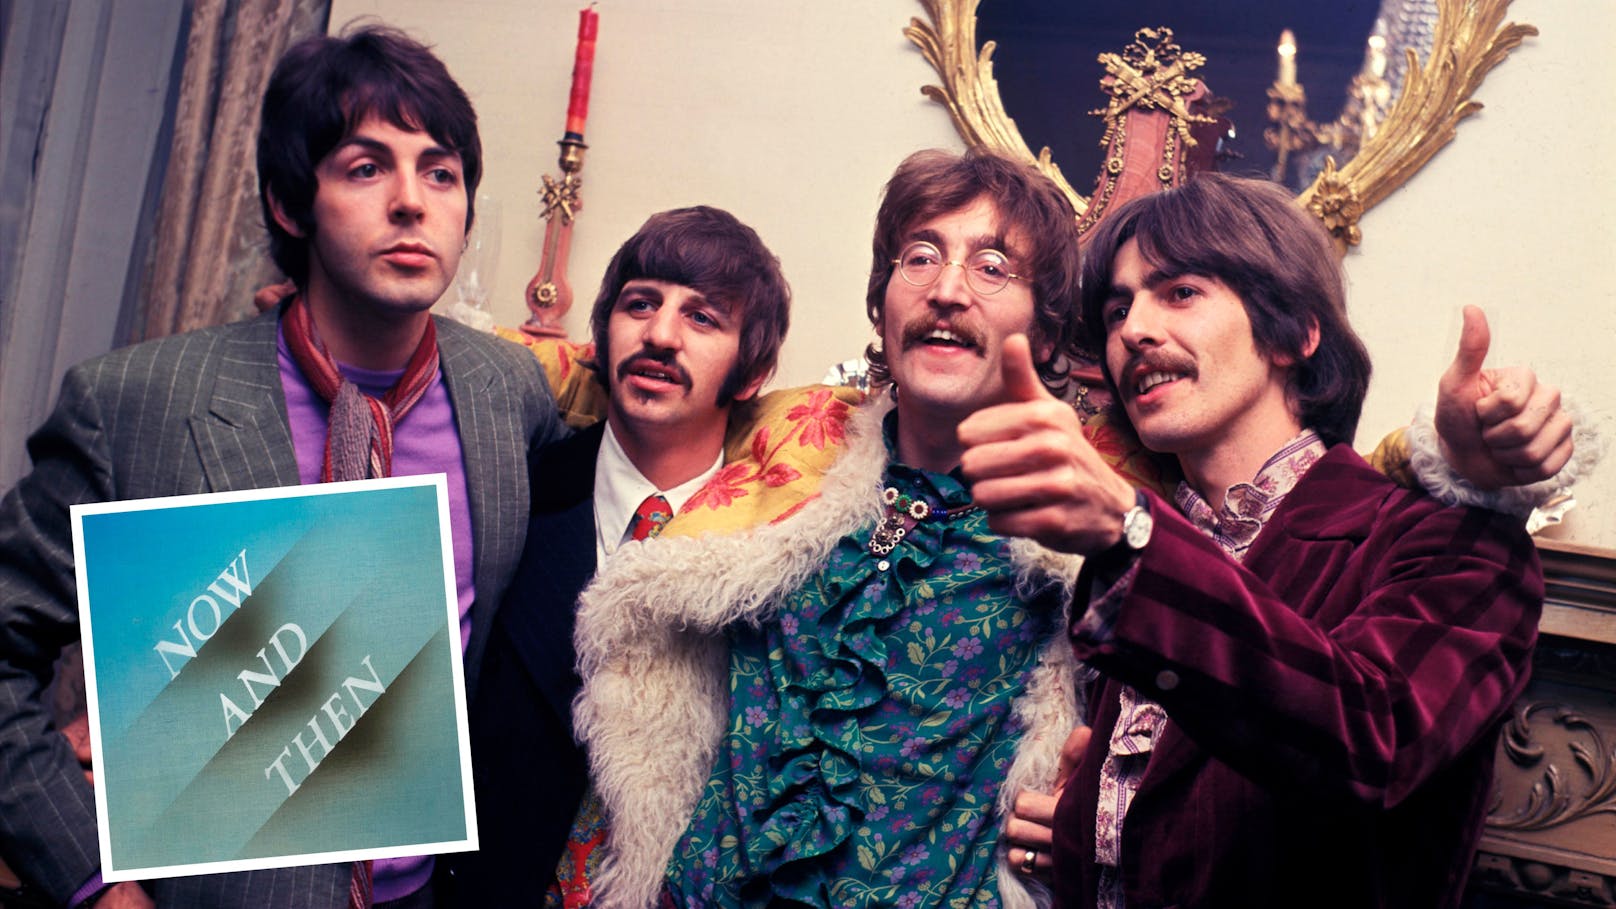 Am 2. November kommt der allerletzte Song der Beatles